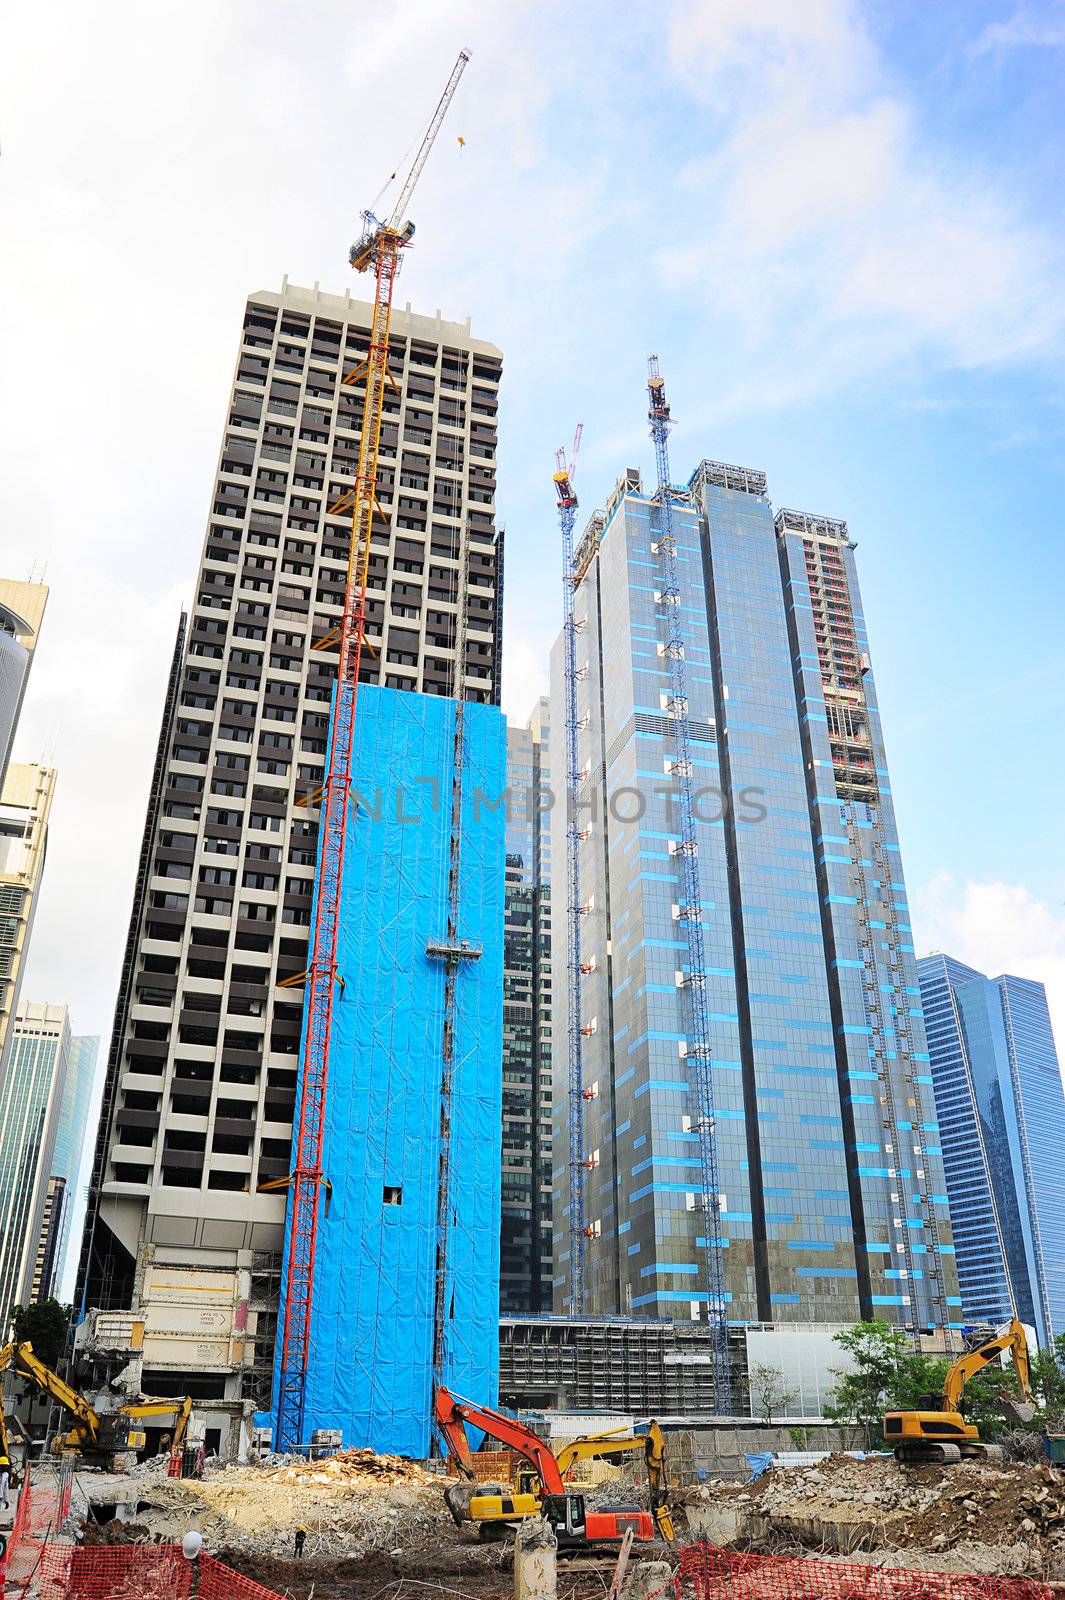 Construction site of a modern skyscraper in Singapore